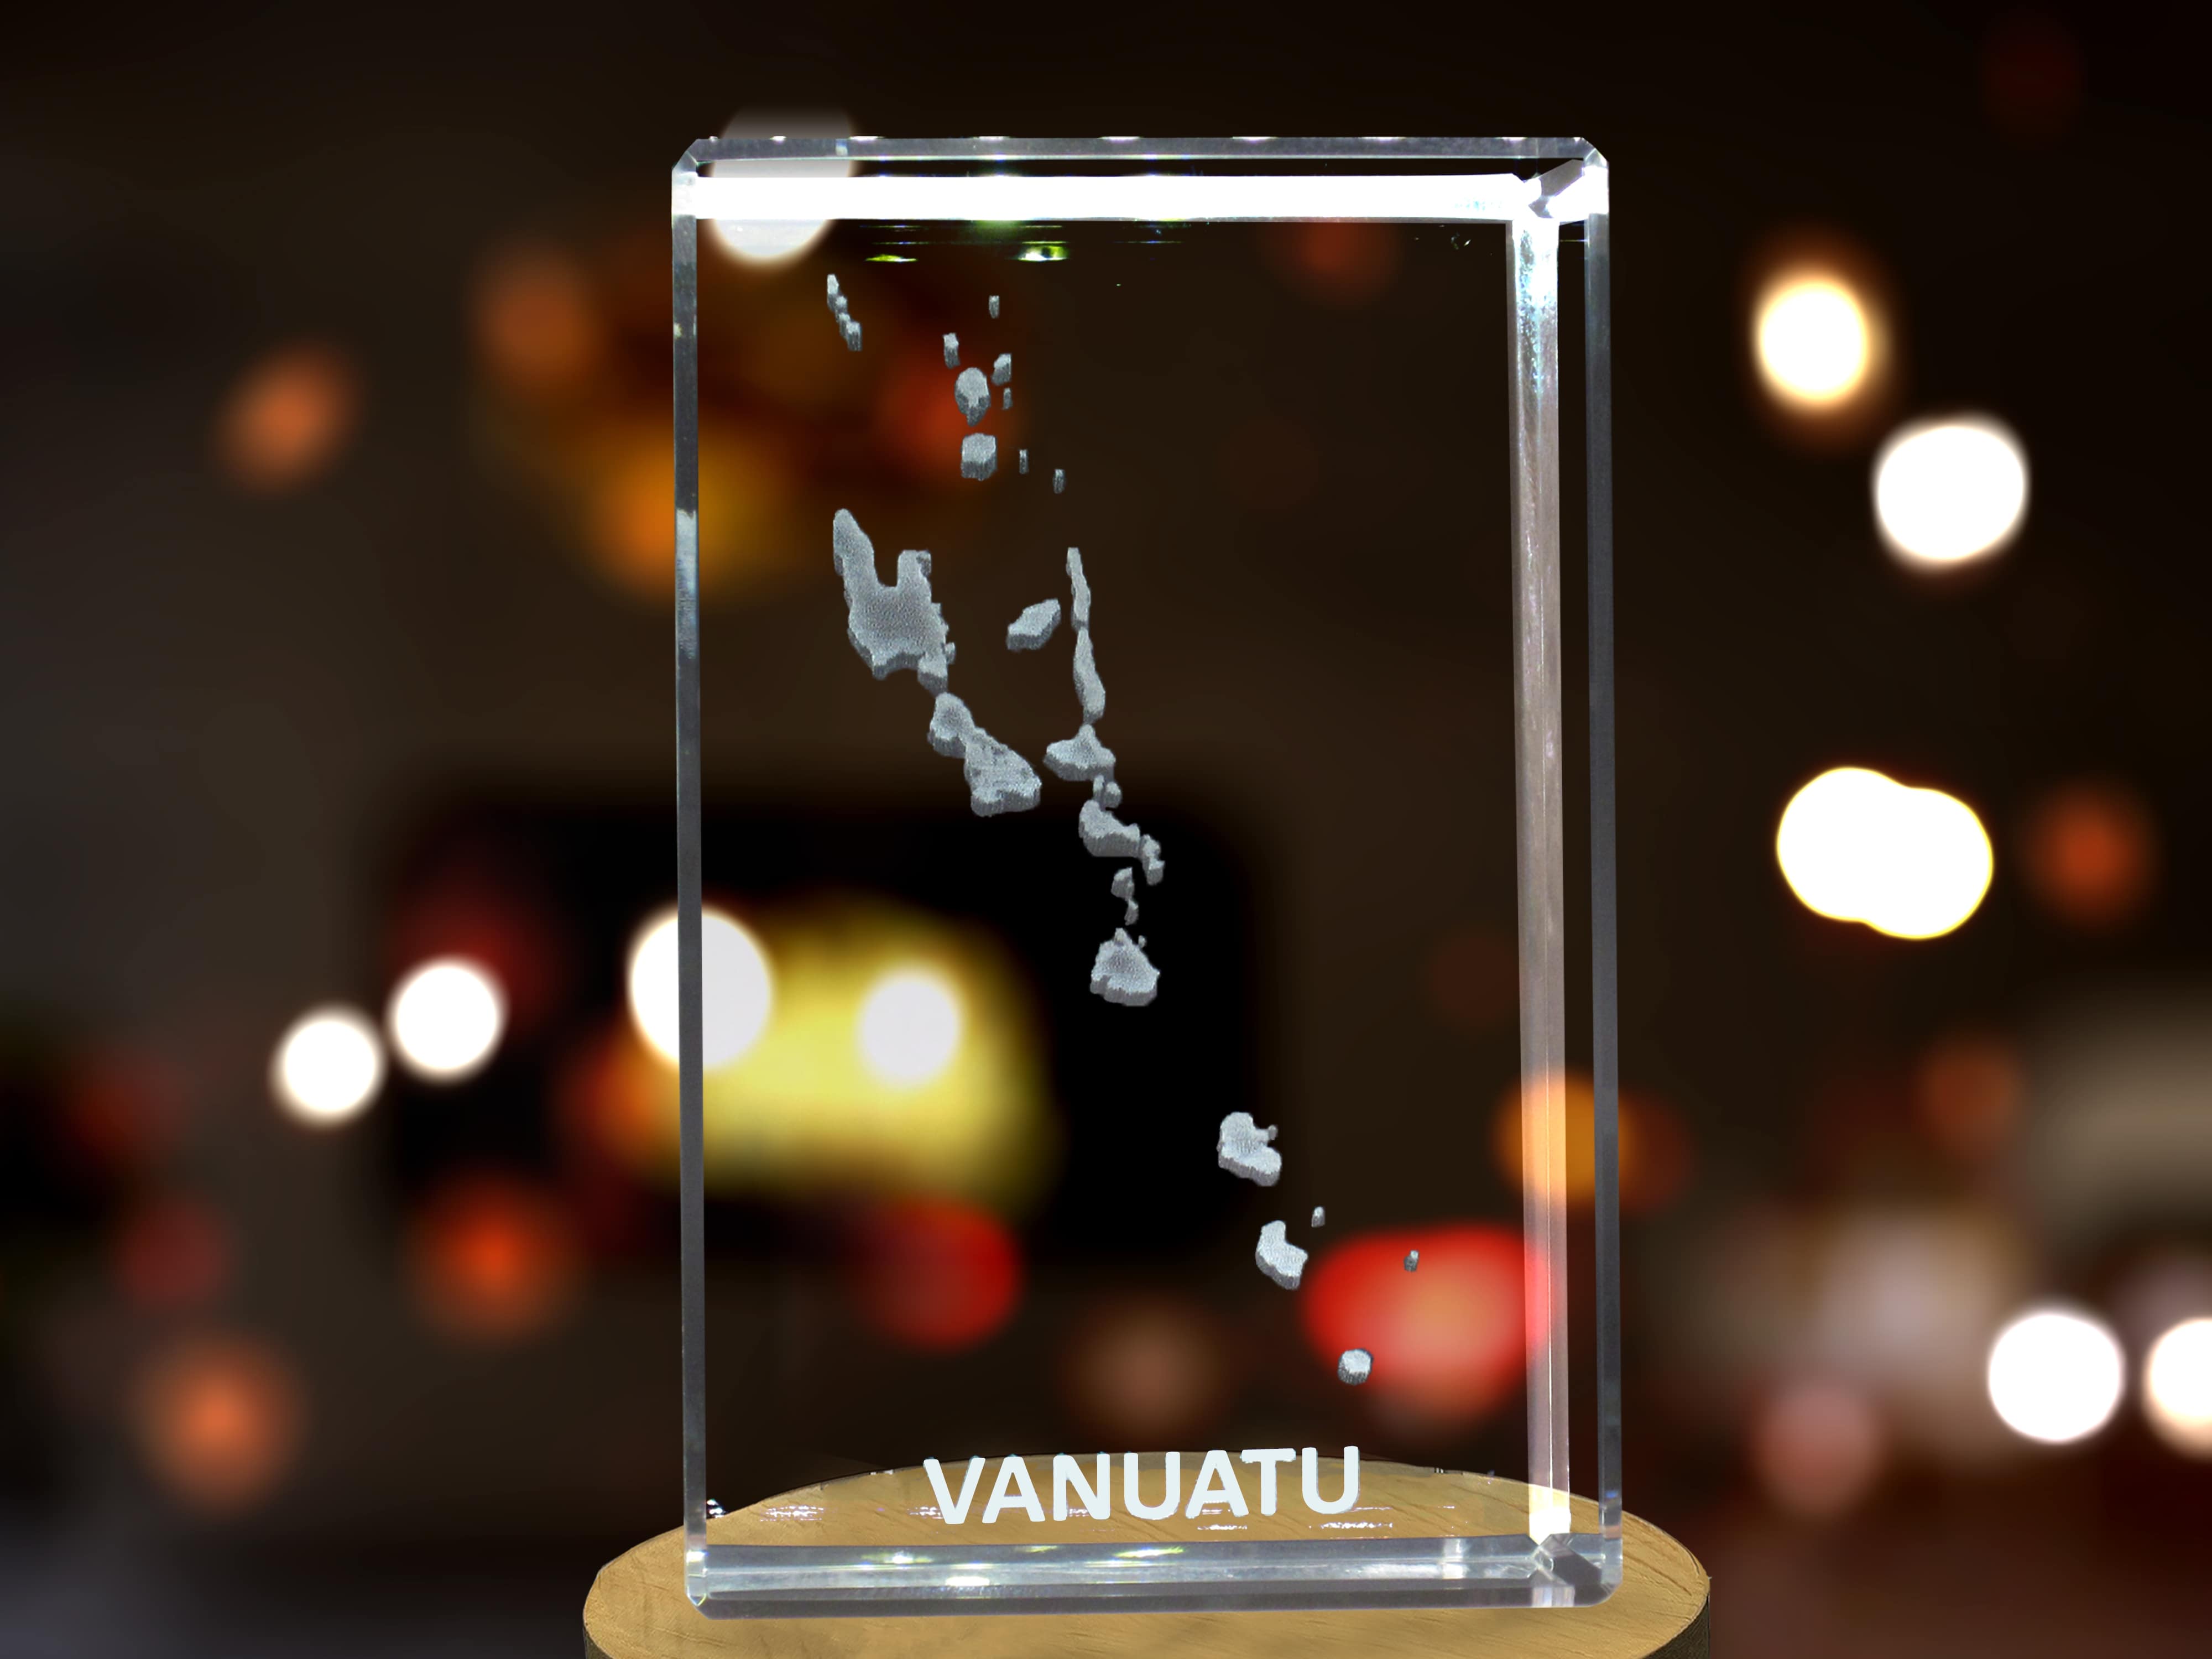 Vanuatu 3D Engraved Crystal 3D Engraved Crystal Keepsake/Gift/Decor/Collectible/Souvenir A&B Crystal Collection